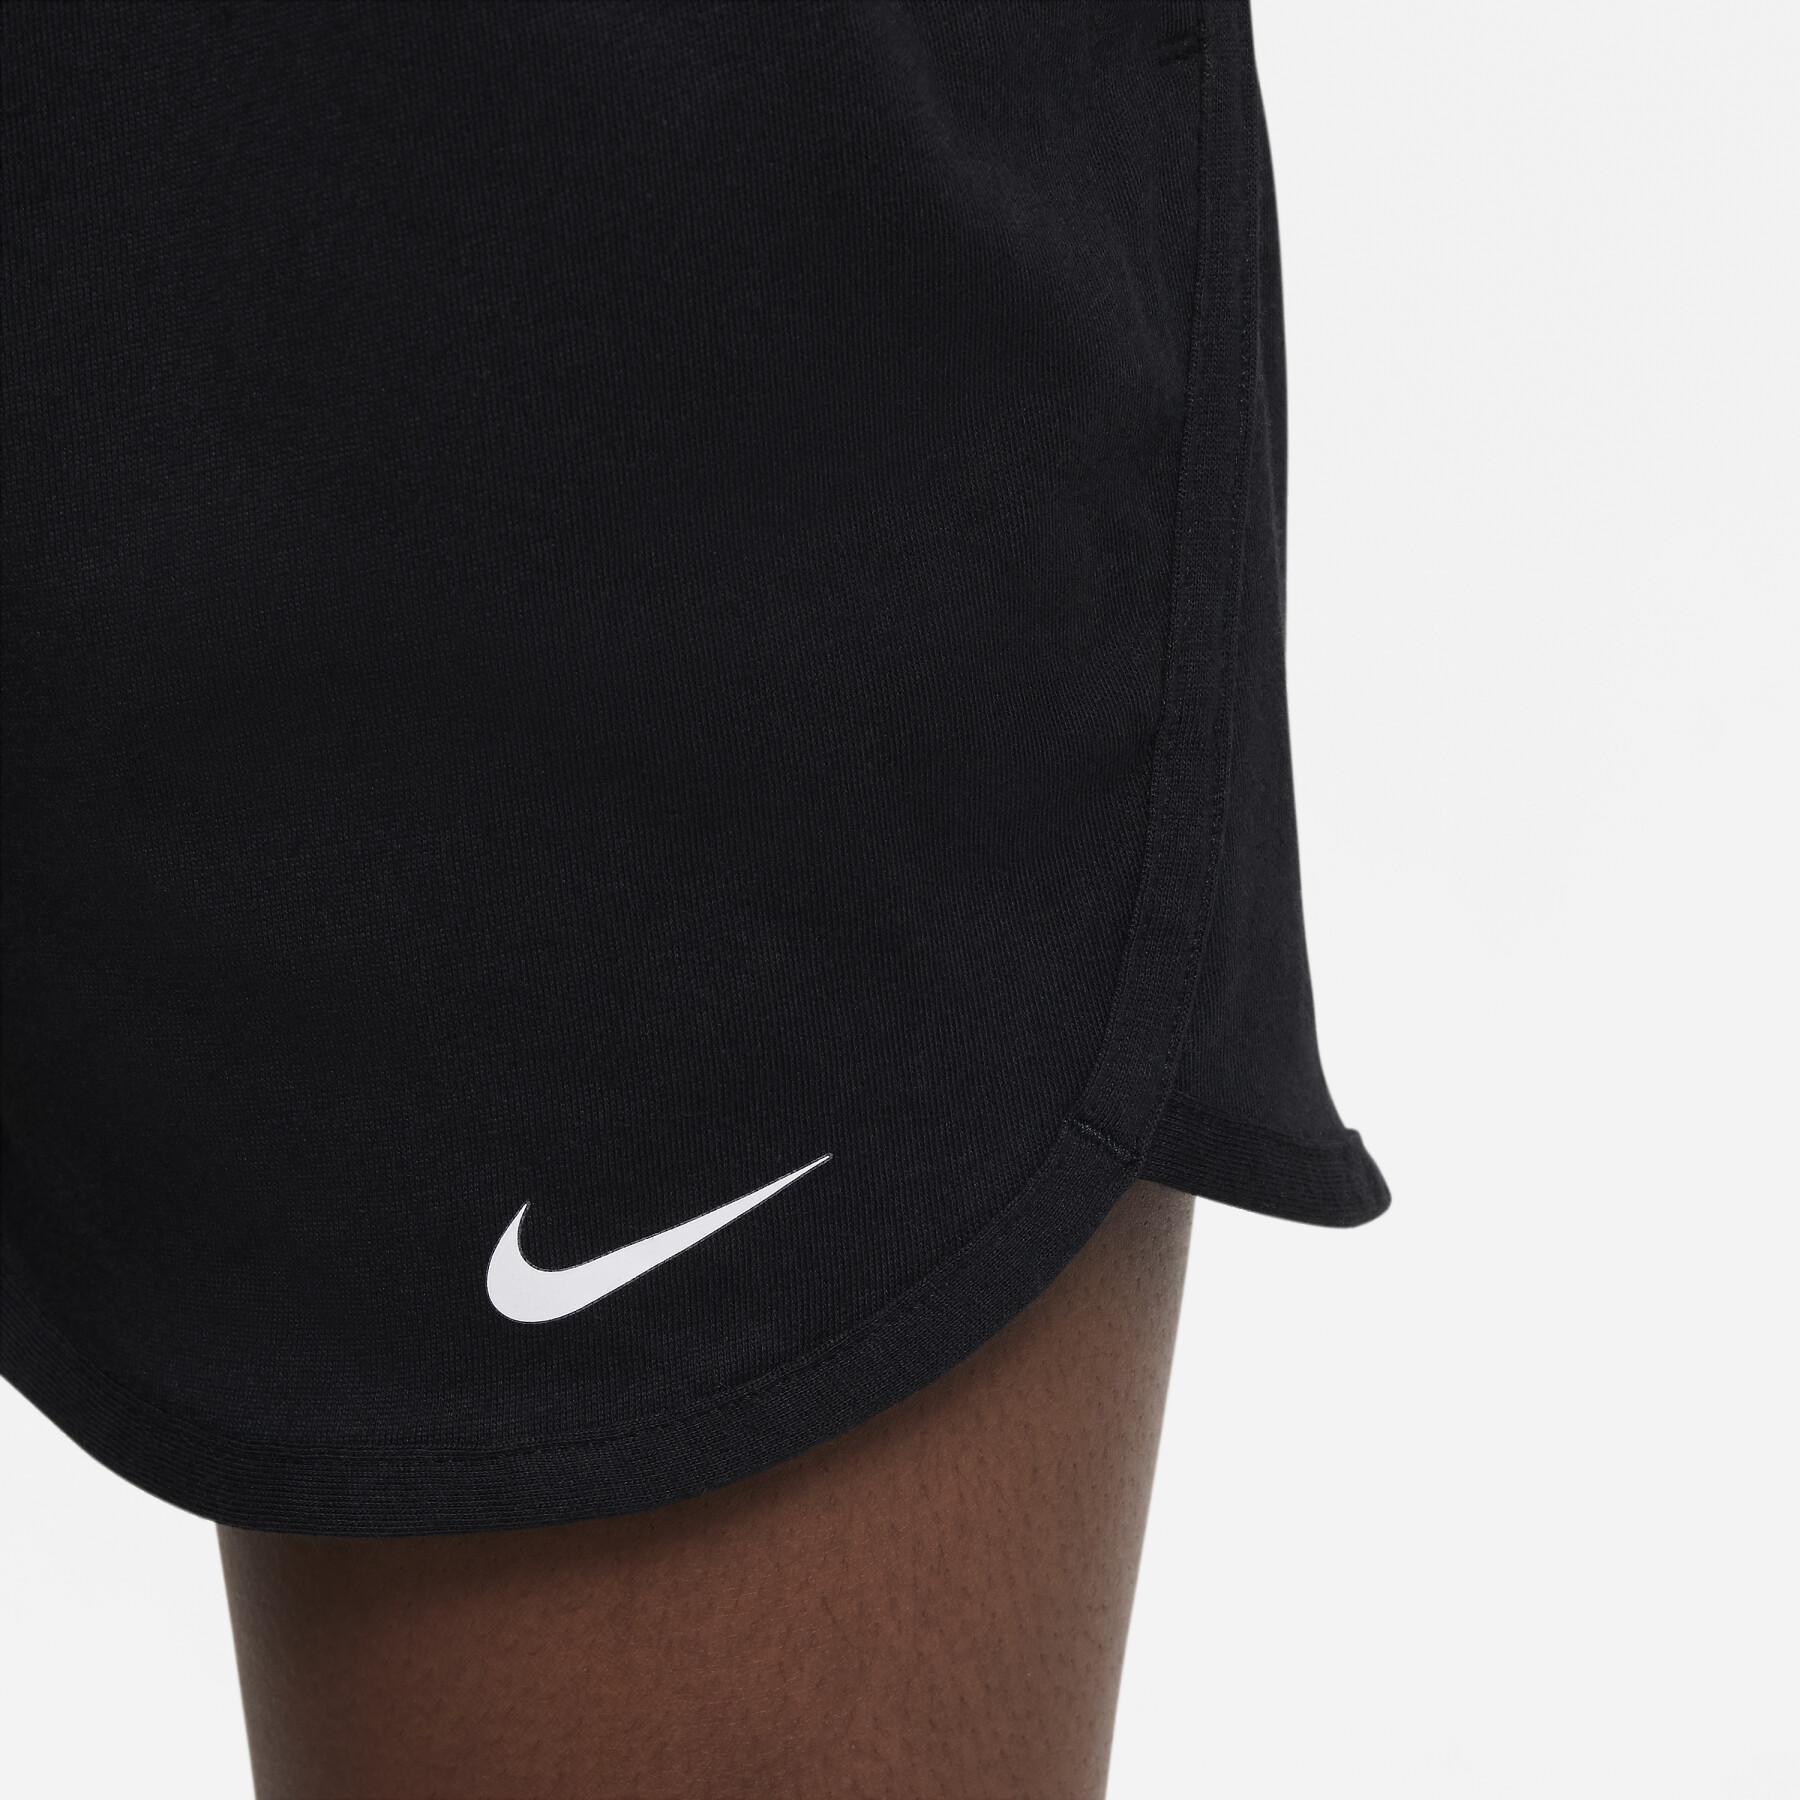 Pantalones cortos para niña Nike Dri-Fit Breezy HR